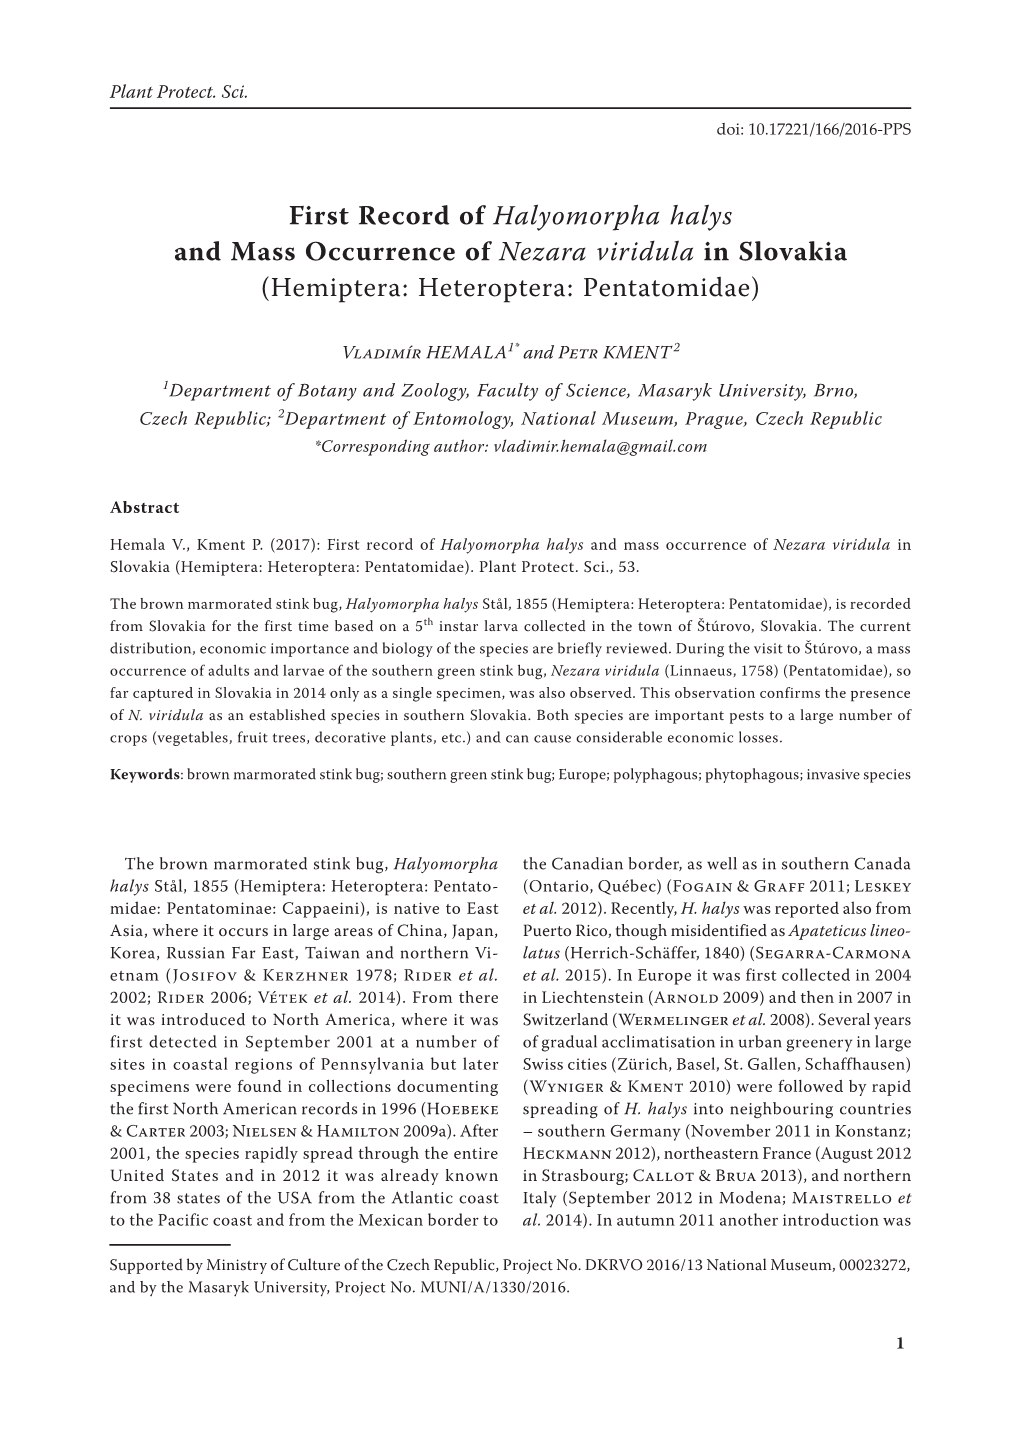 First Record of Halyomorpha Halys and Mass Occurrence of Nezara Viridula in Slovakia (Hemiptera: Heteroptera: Pentatomidae)